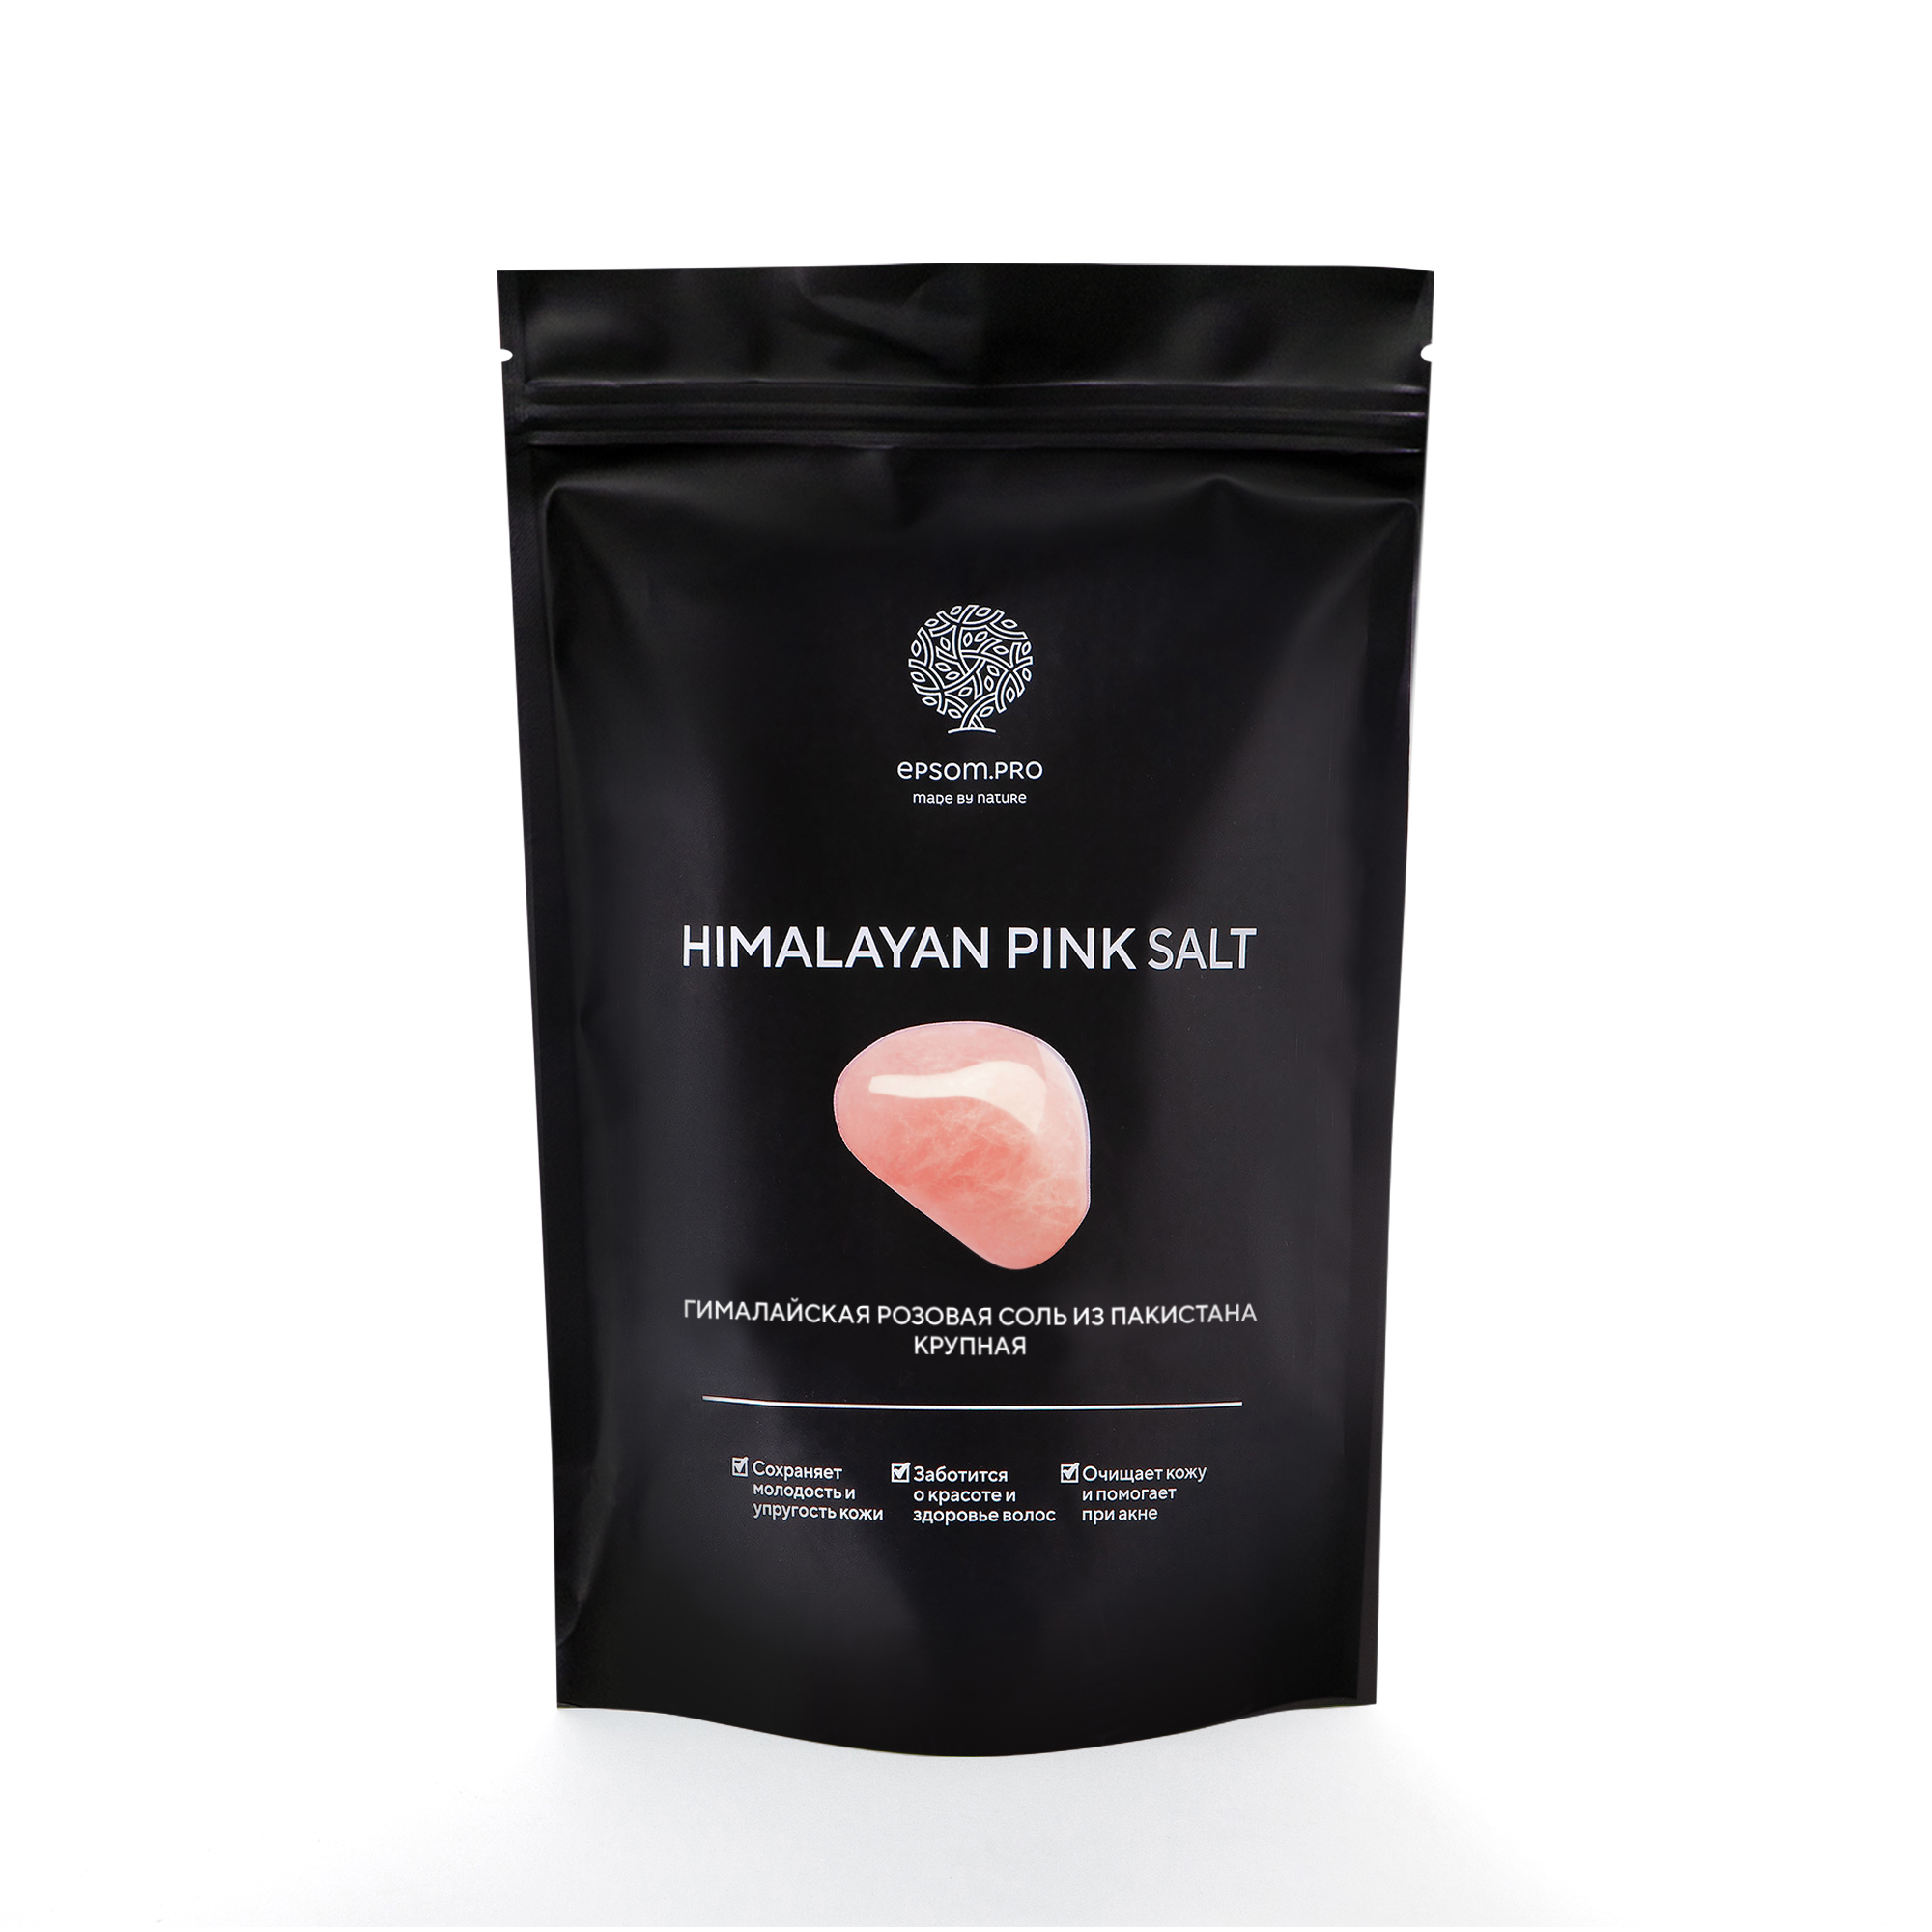 lunar lab himalayan pink salt гималайская розовая соль банка 3 кг Гималайская розовая соль HYMALAYAN PINK SALT крупная 1 кг